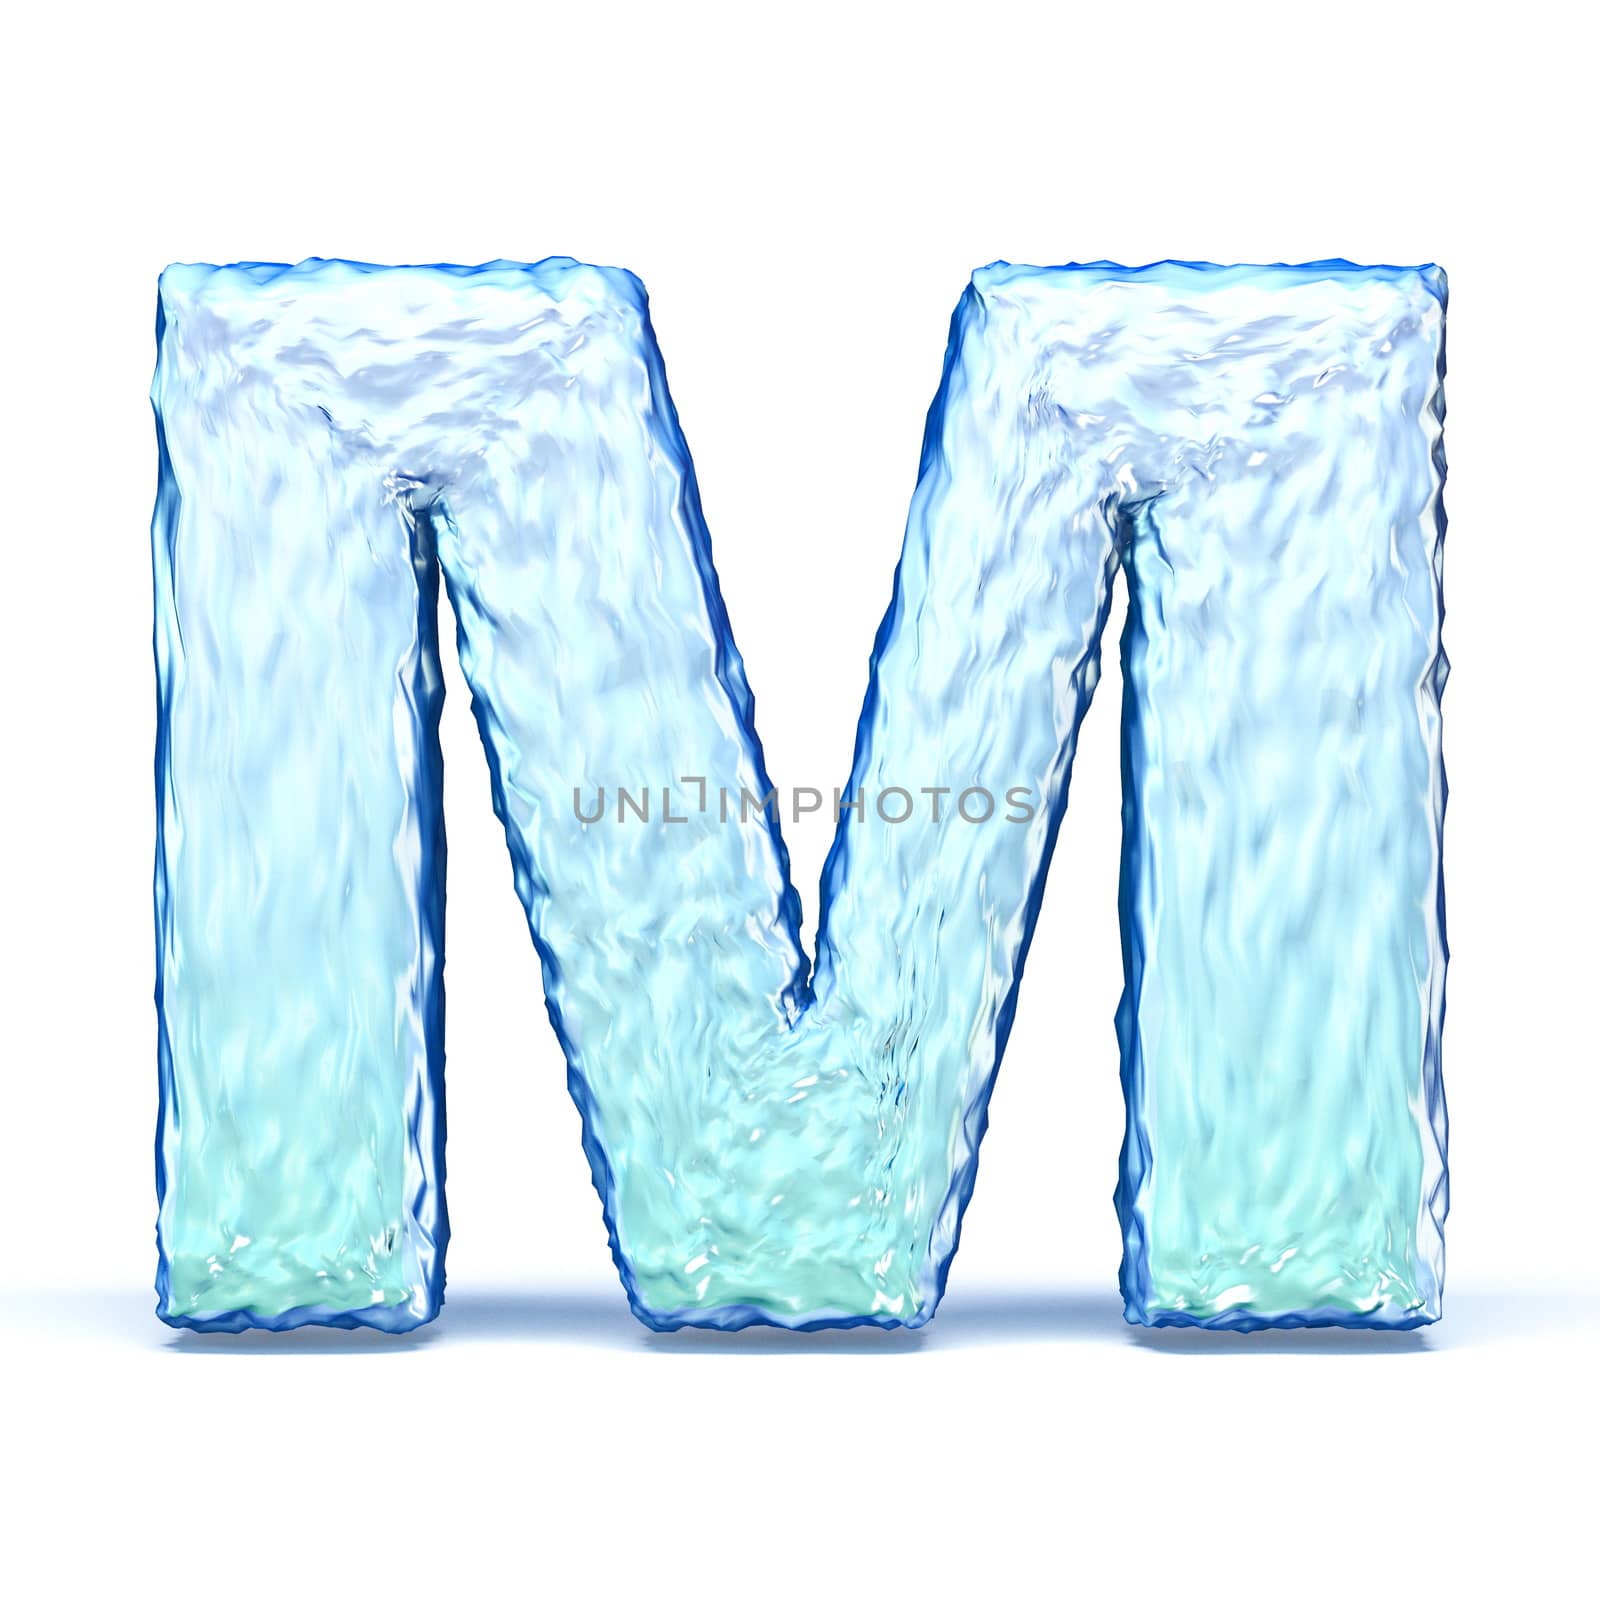 Ice crystal font letter M 3D render illustration isolated on white background